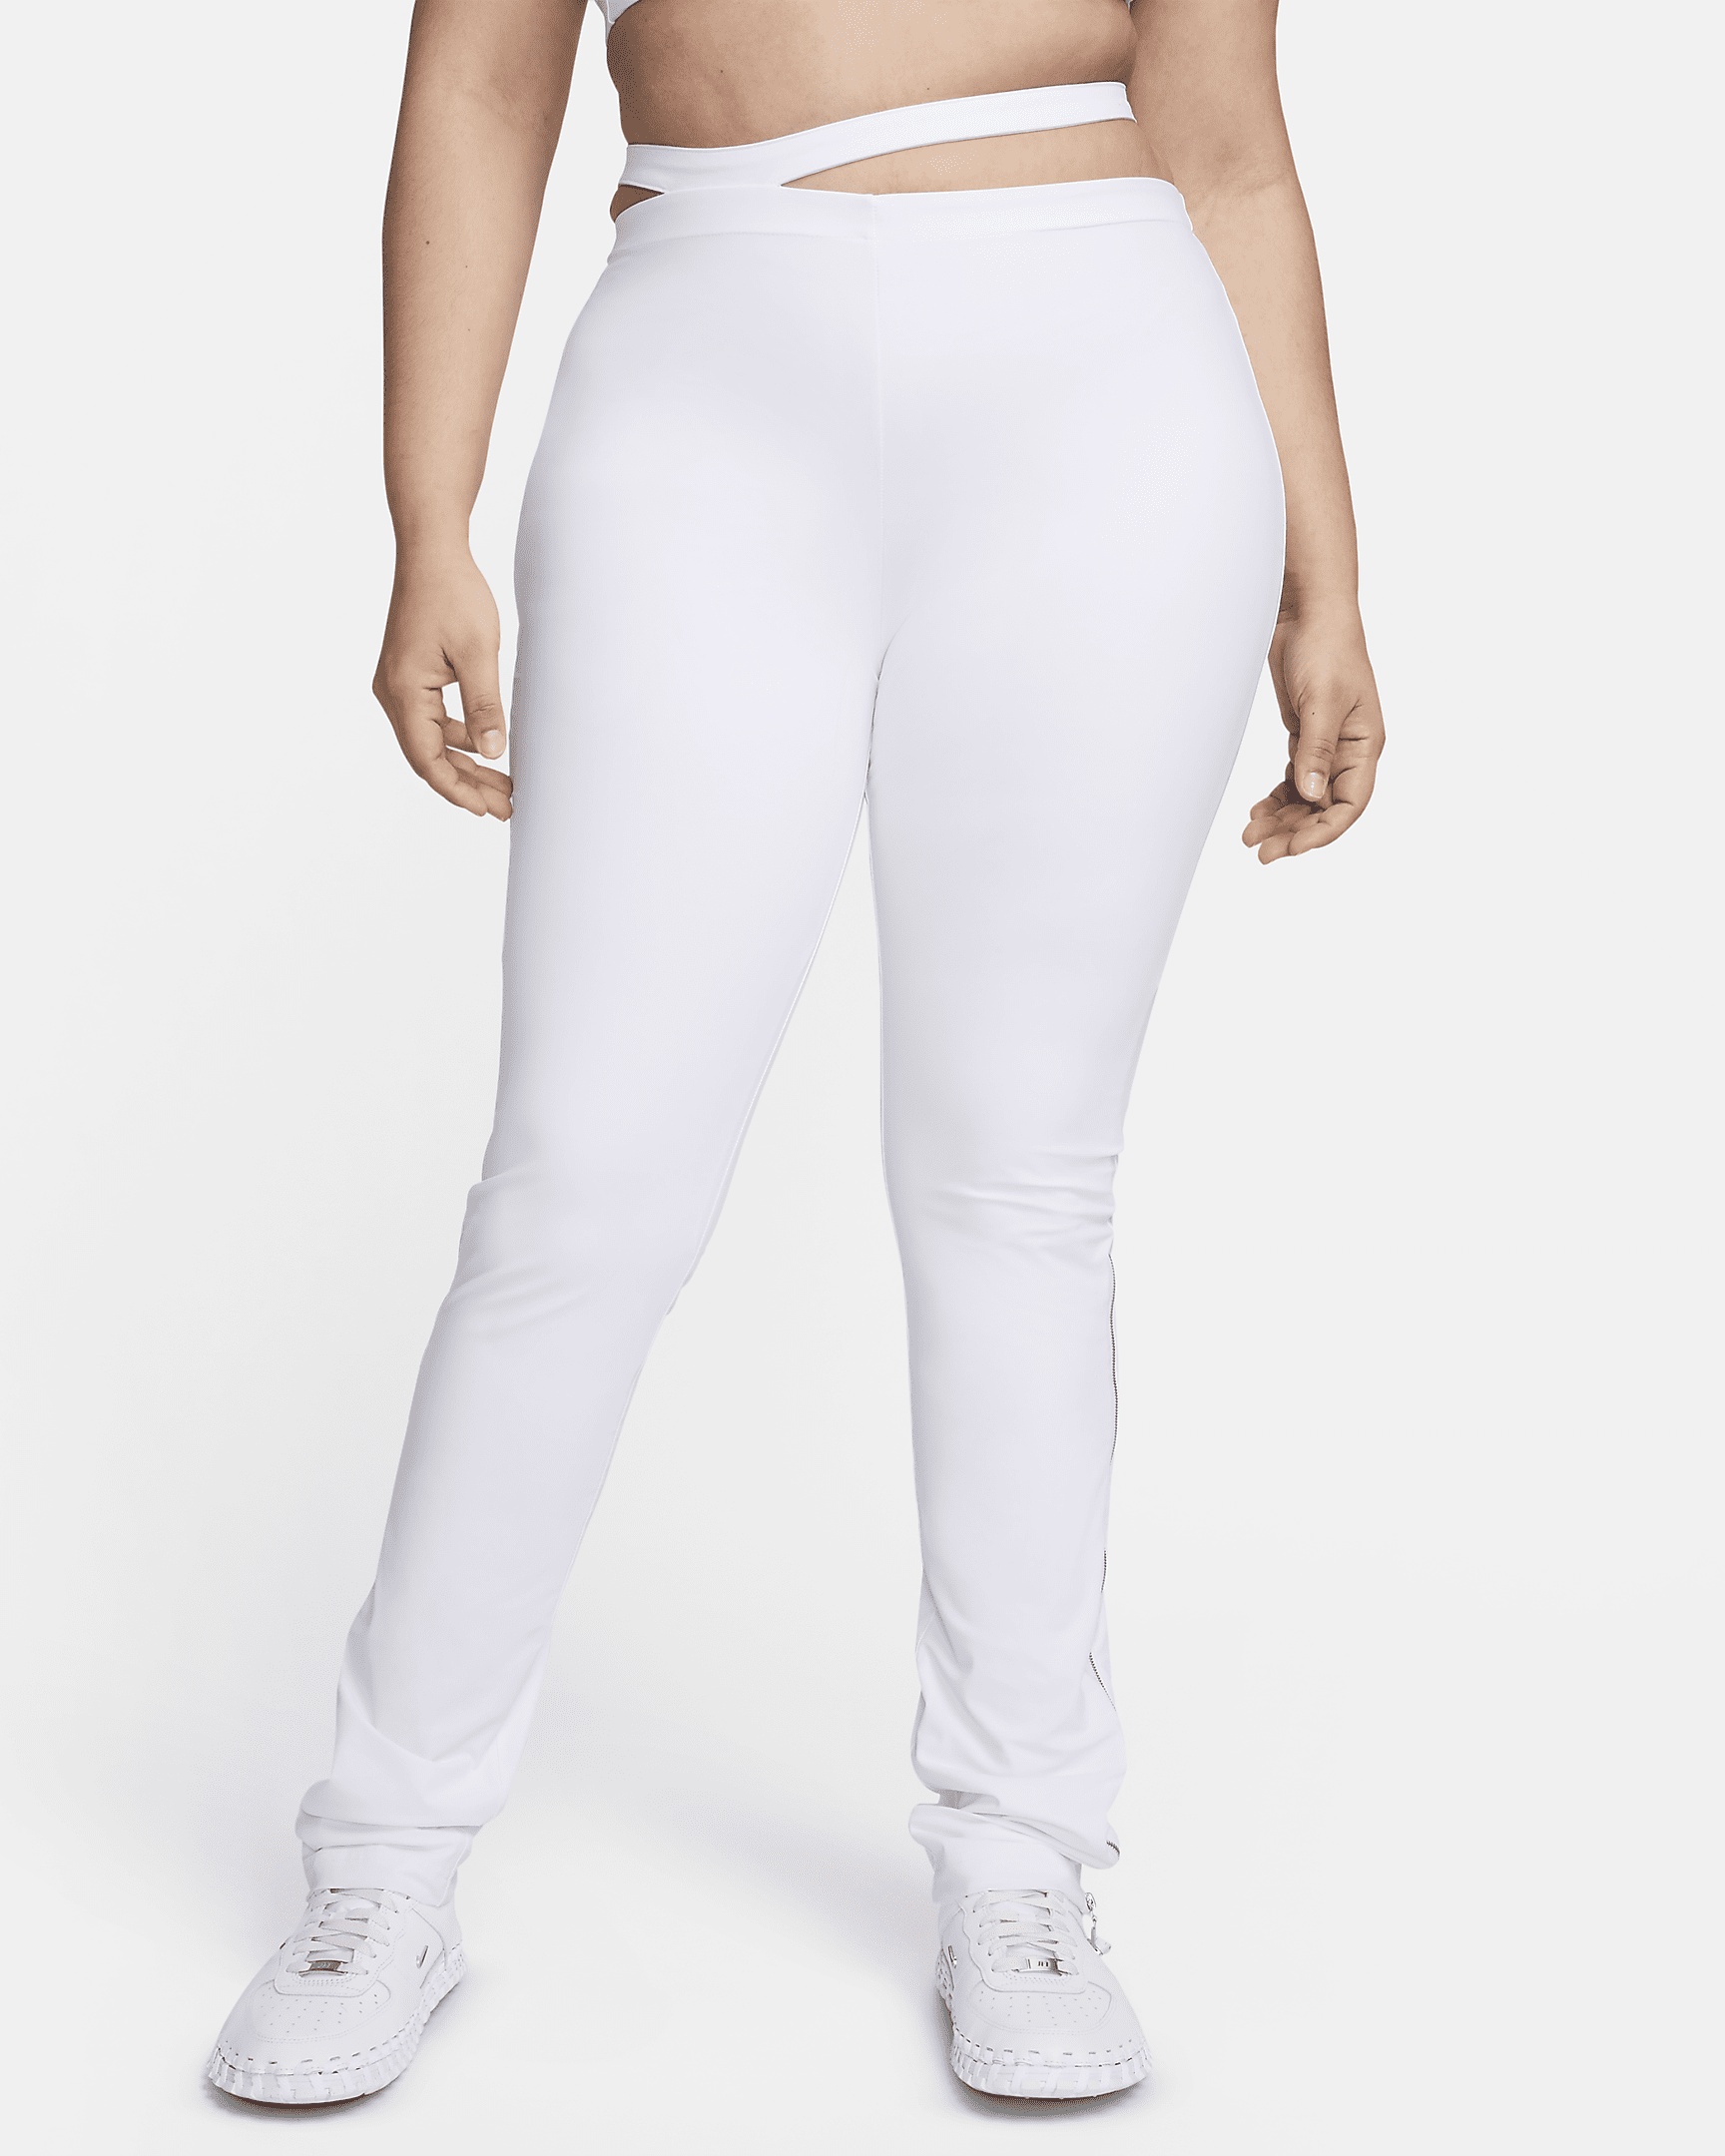 Nike Women's x Jacquemus Pants - 1